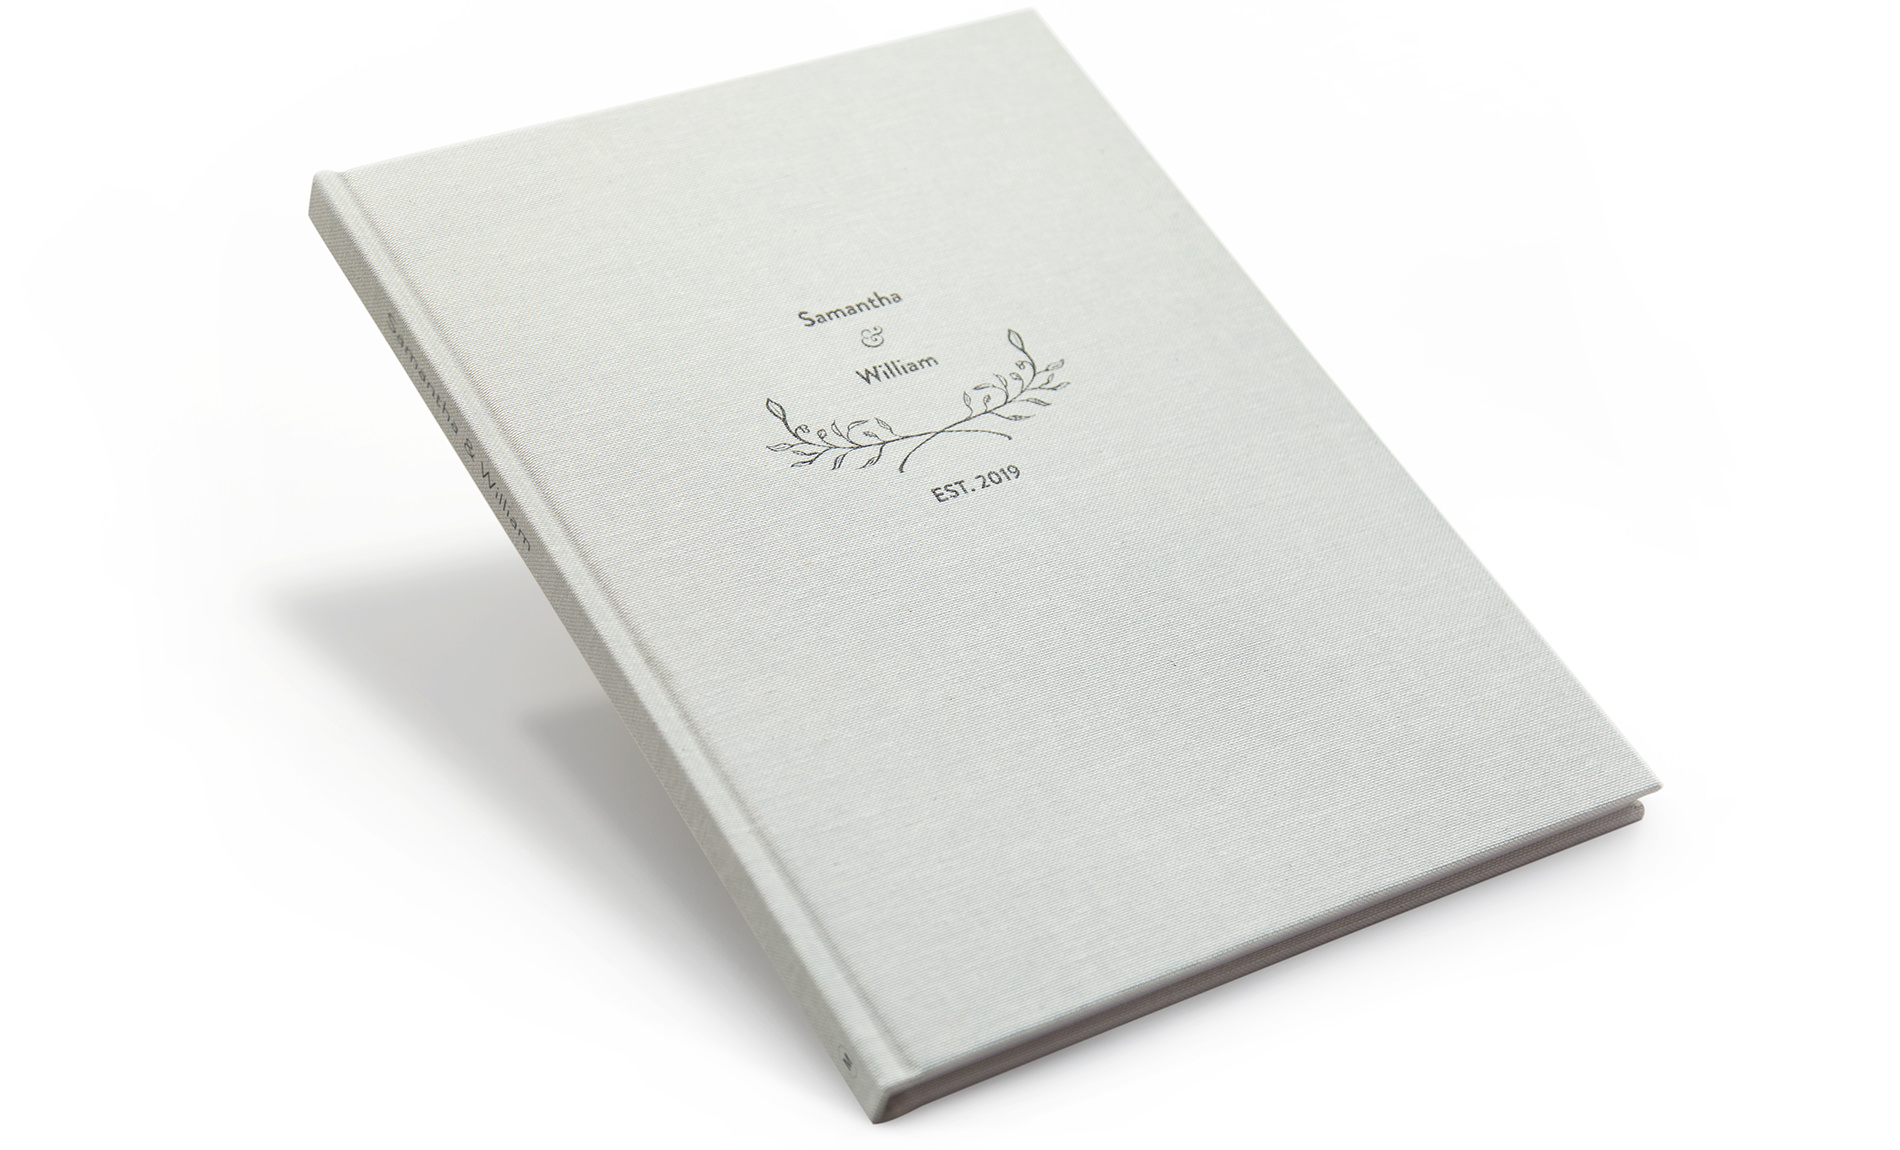 Grey linen book with wedding designer cover